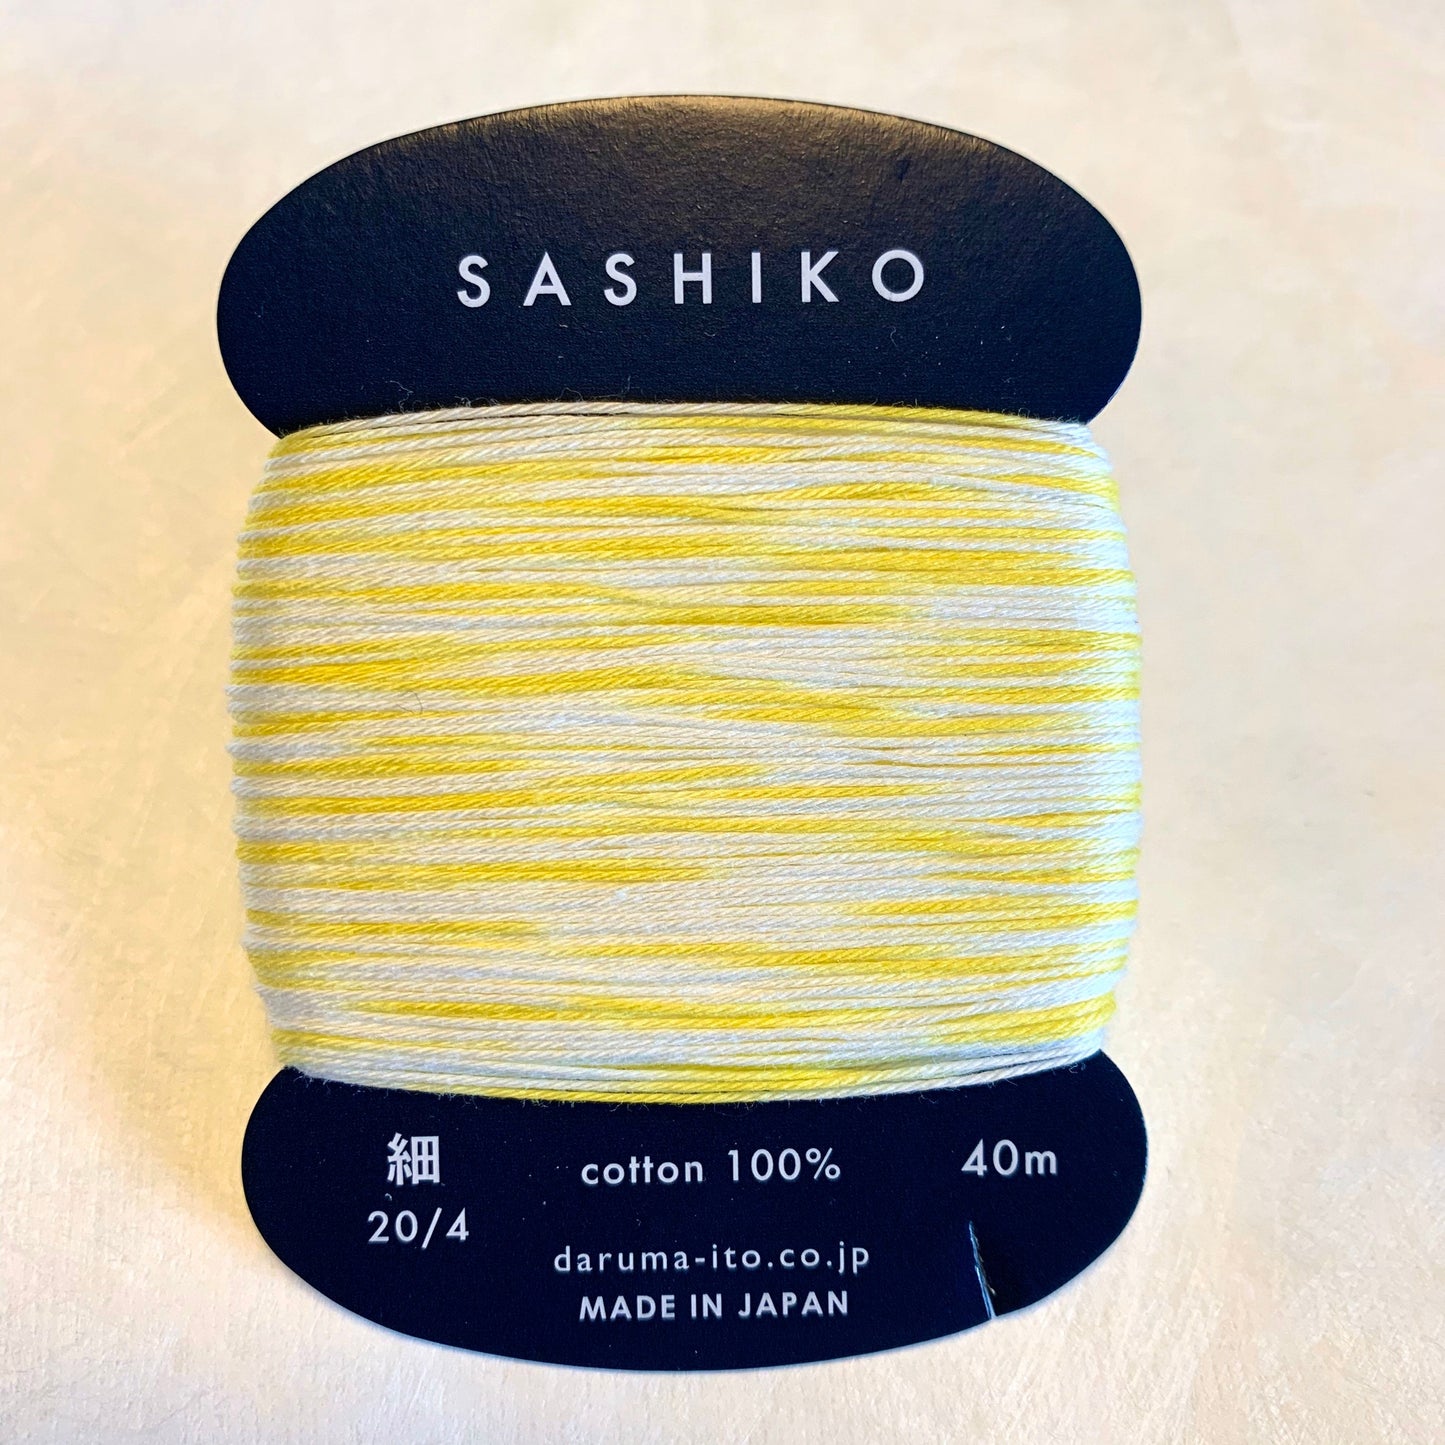 Daruma #303 LEMON SQUASH variegated sunshine yellow and daisy white Japanese Cotton SASHIKO thread 40 meter skein 20/4